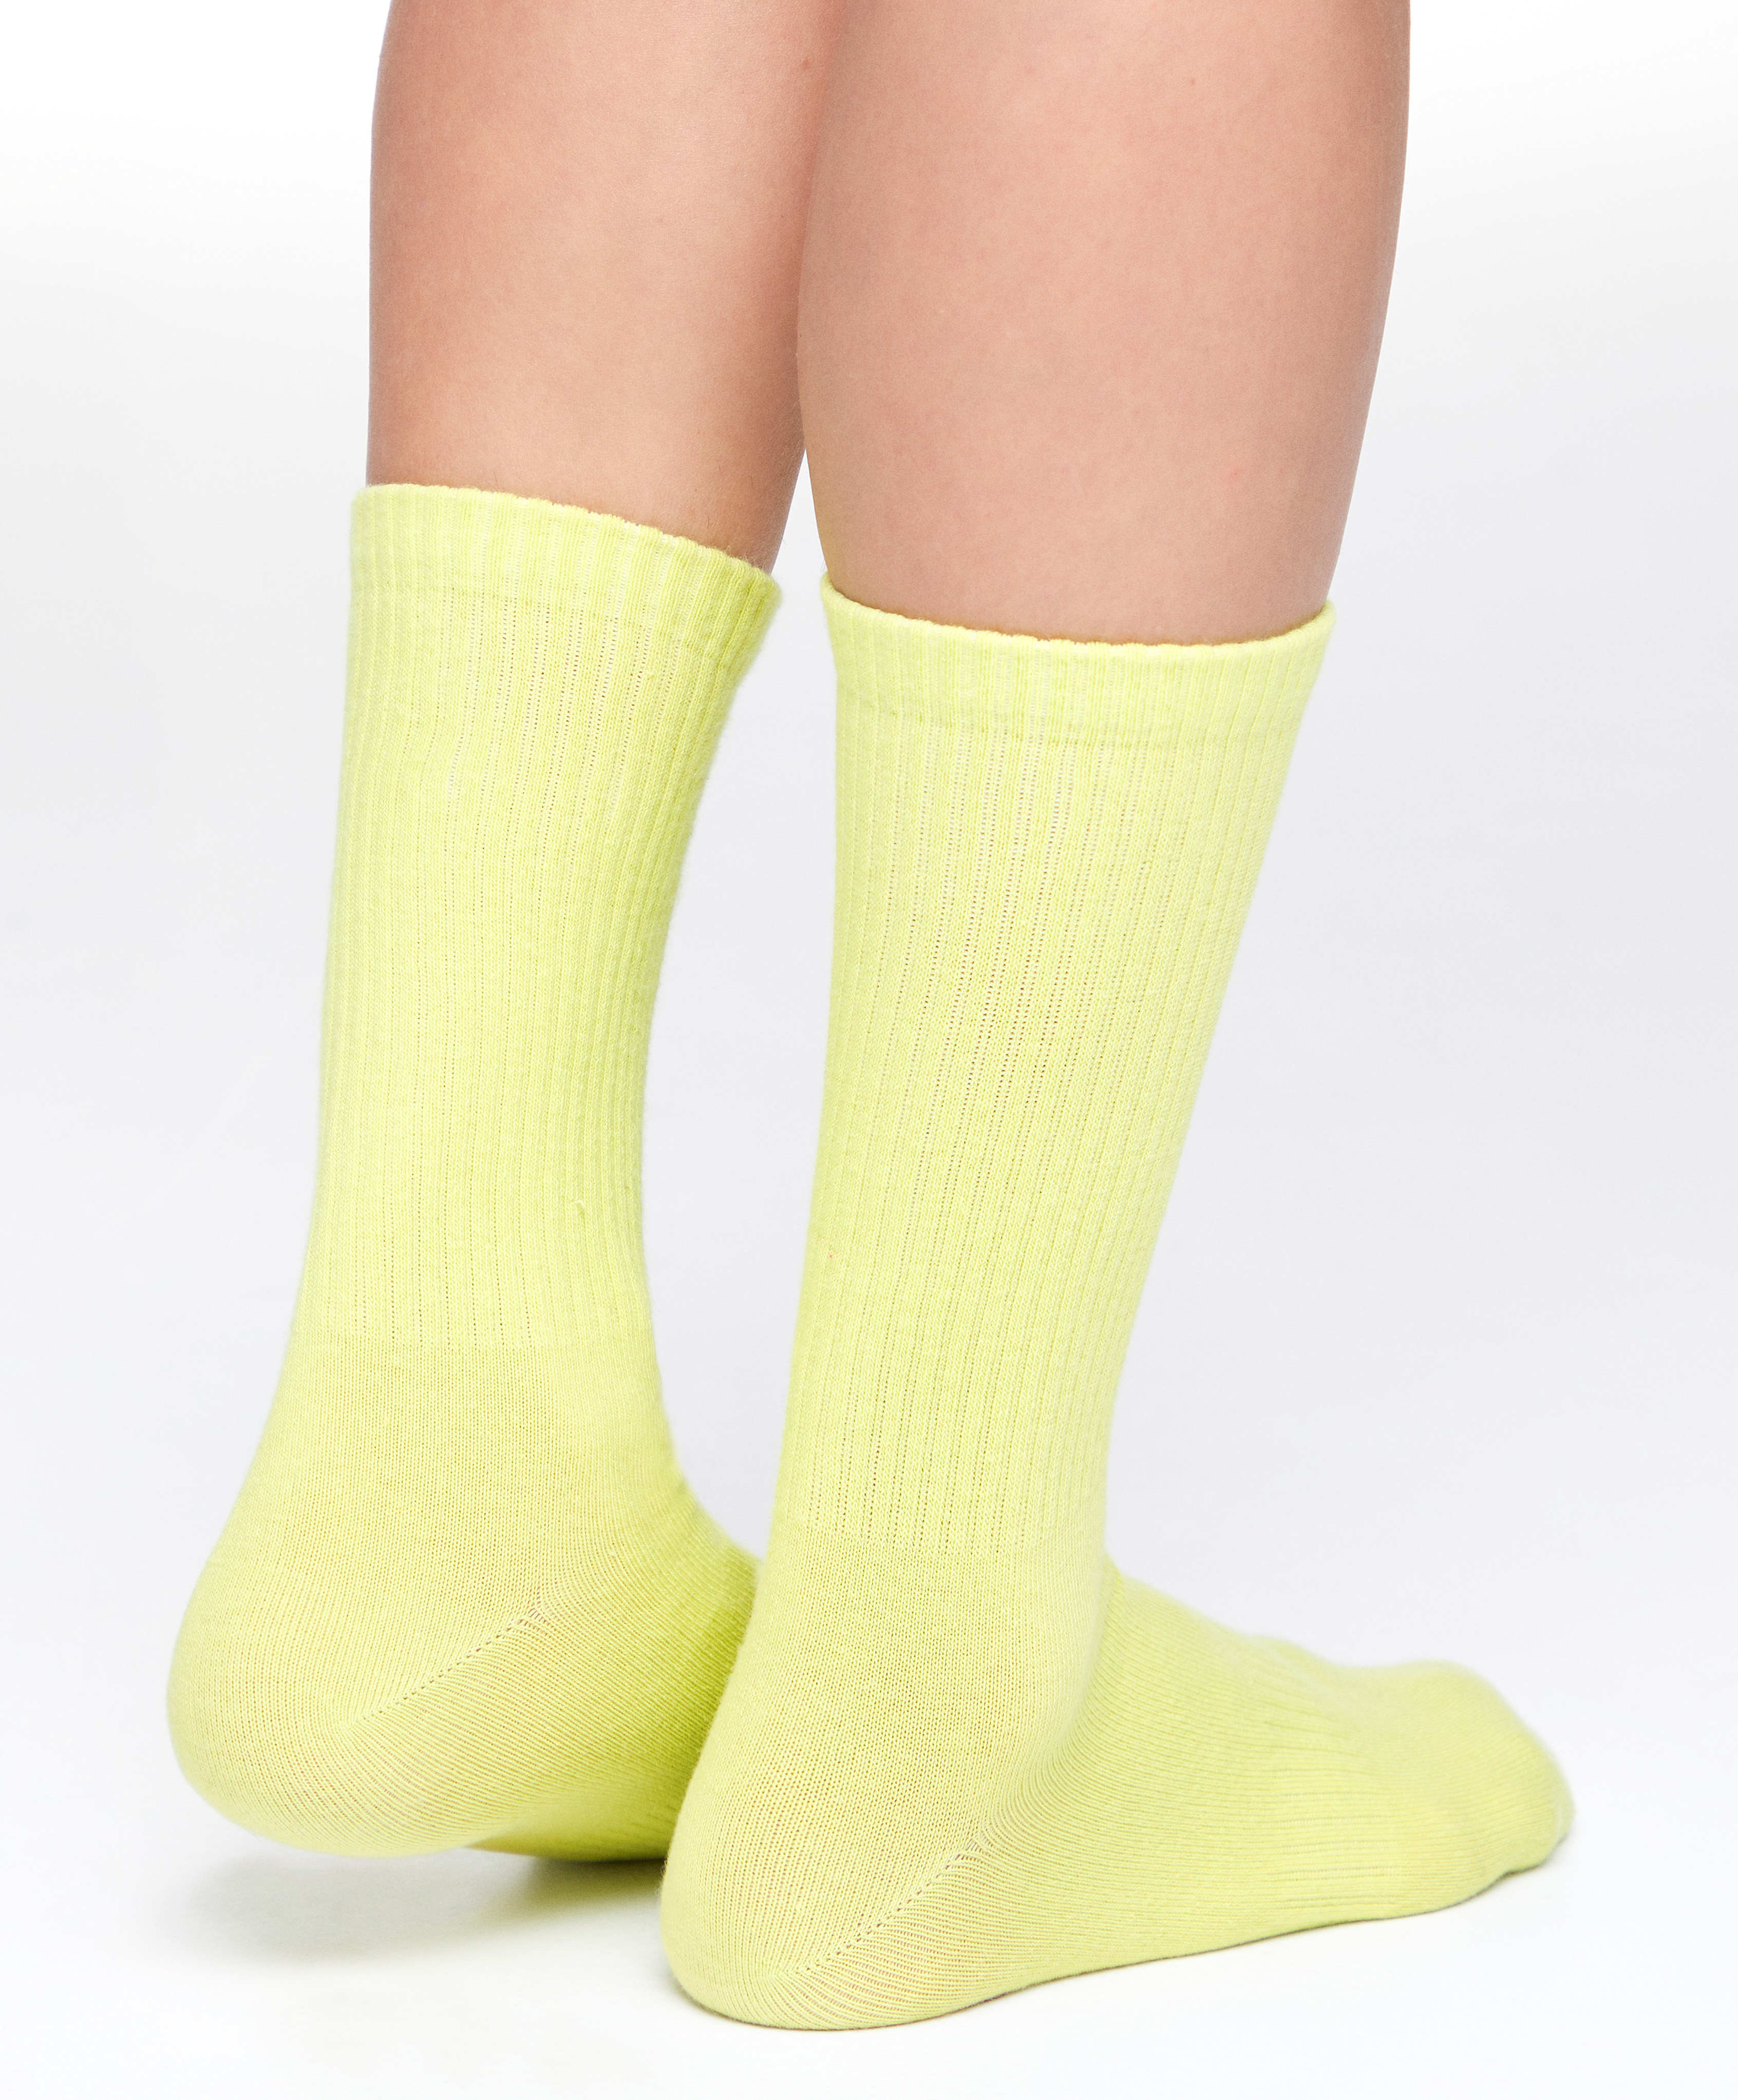 Cotton sports classic socks